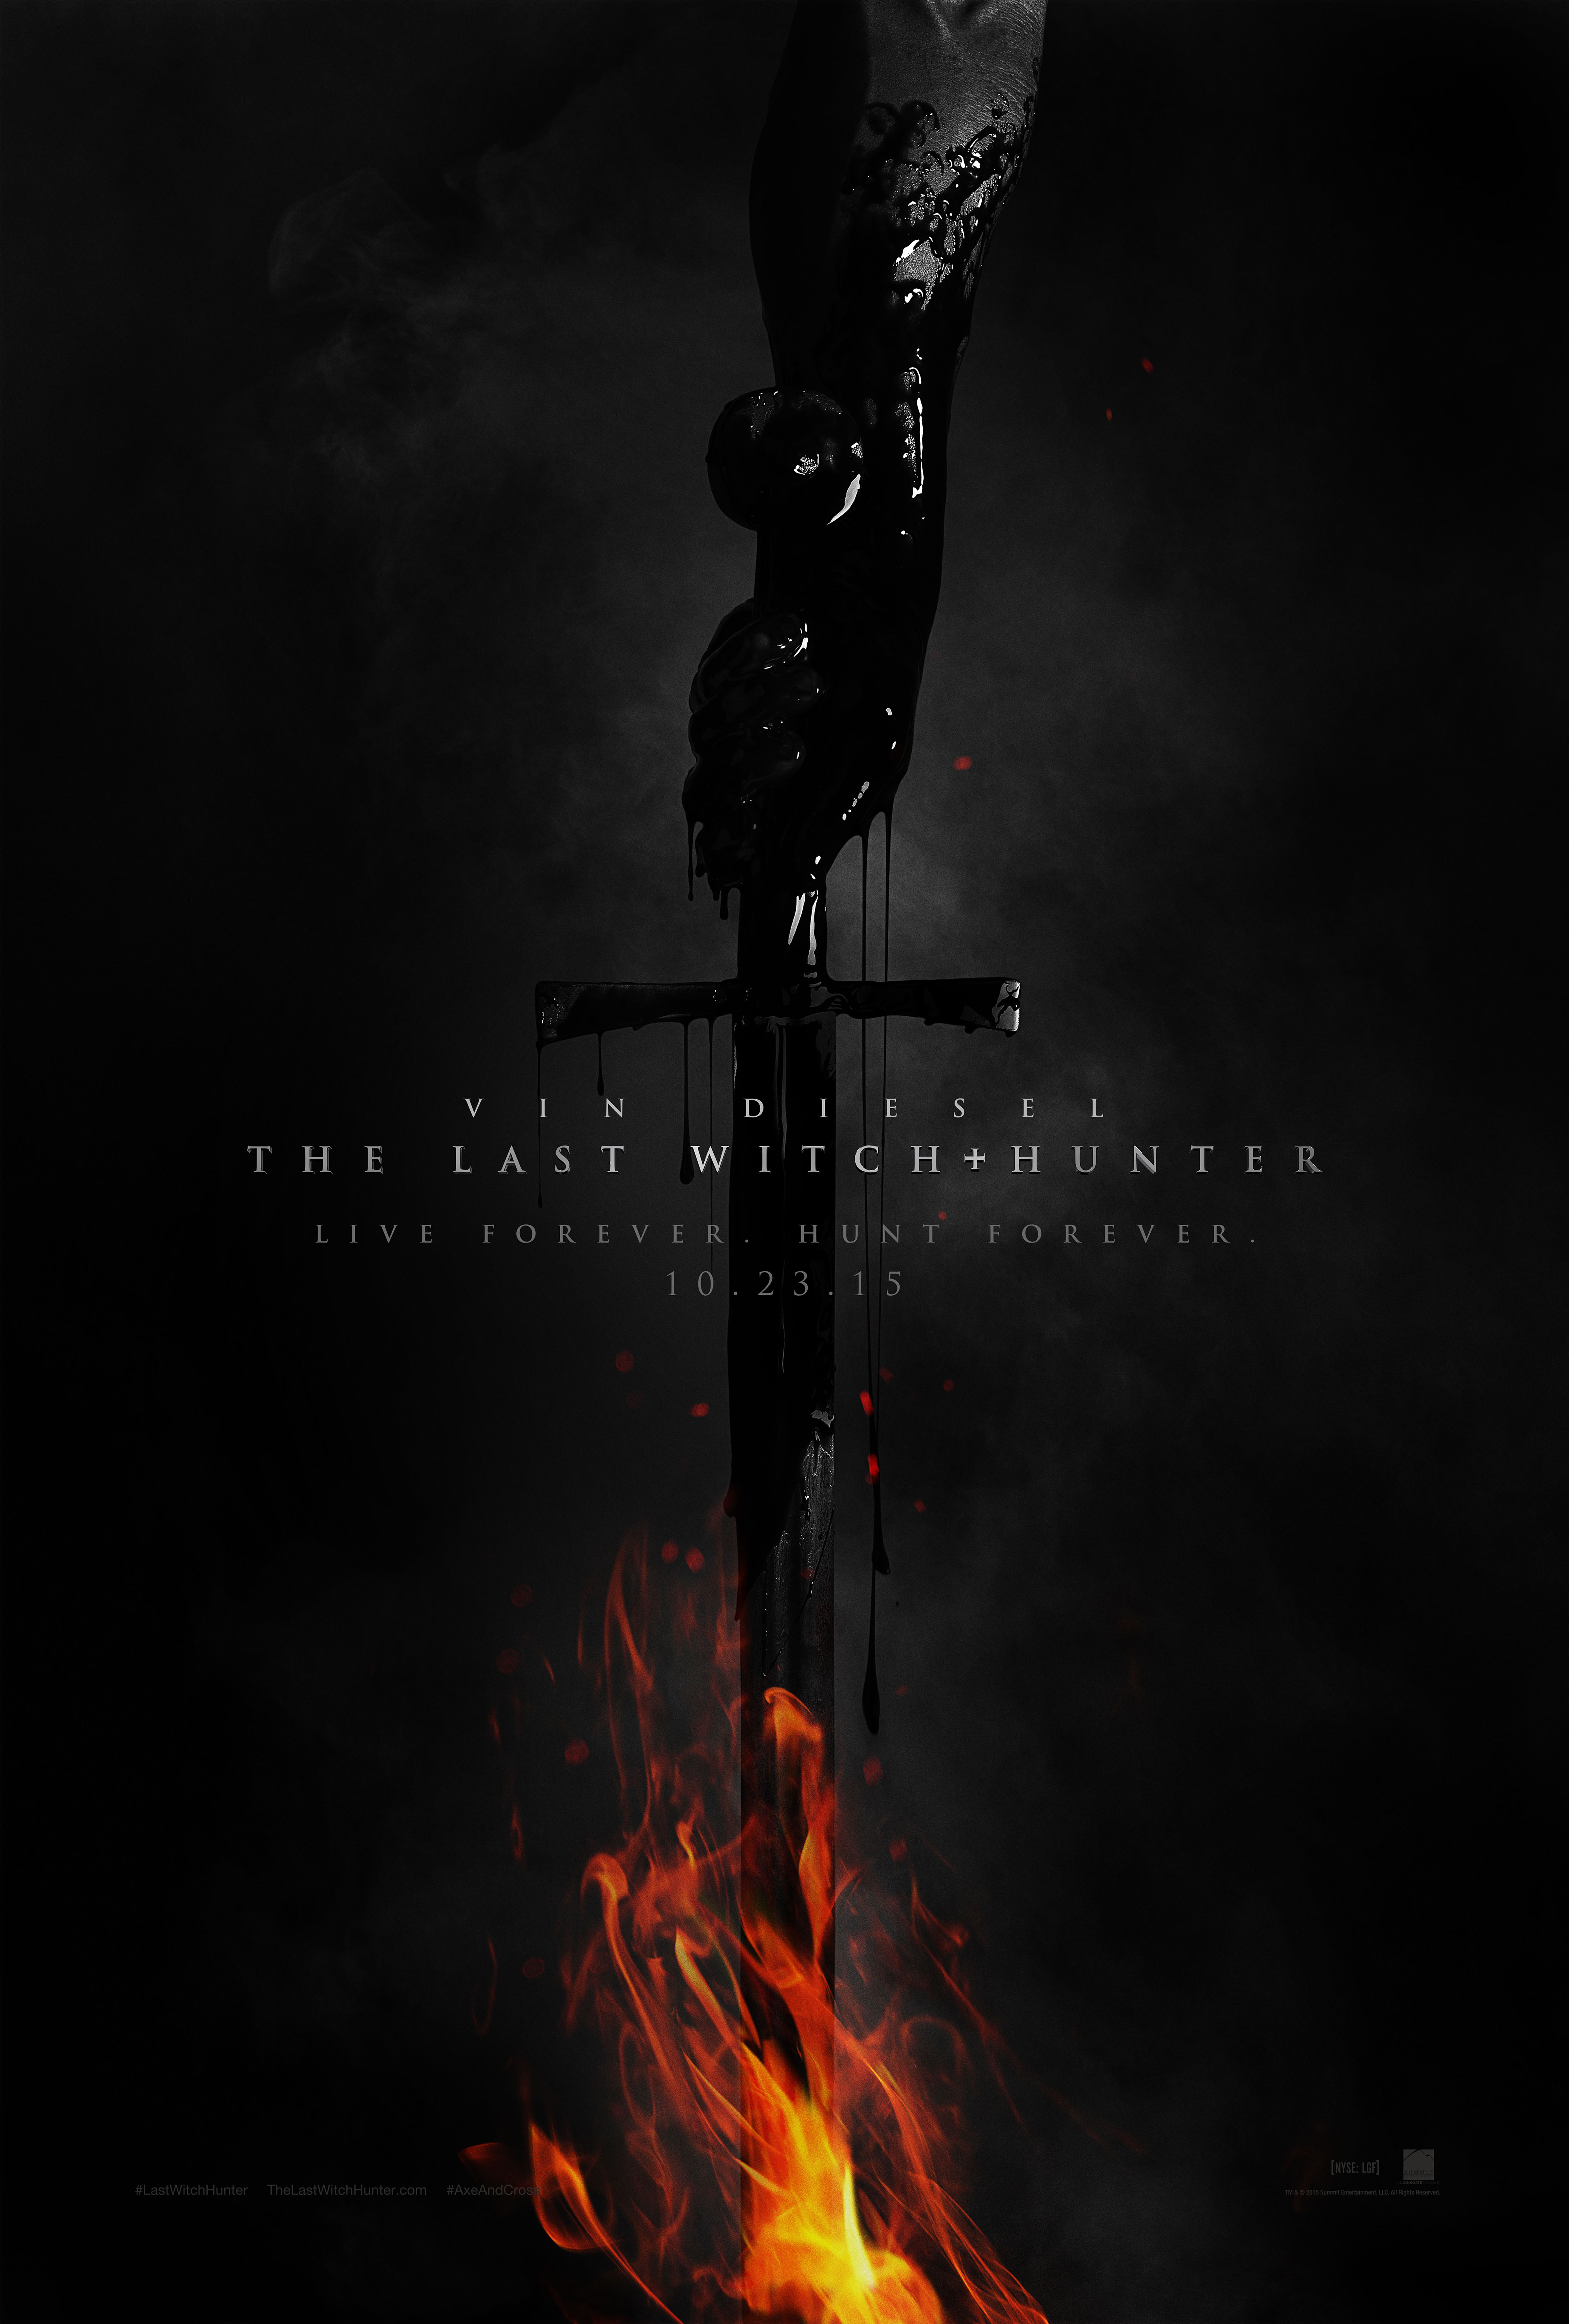 The Last Witch Hunter Trailer Starring Vin Diesel4050 x 6000